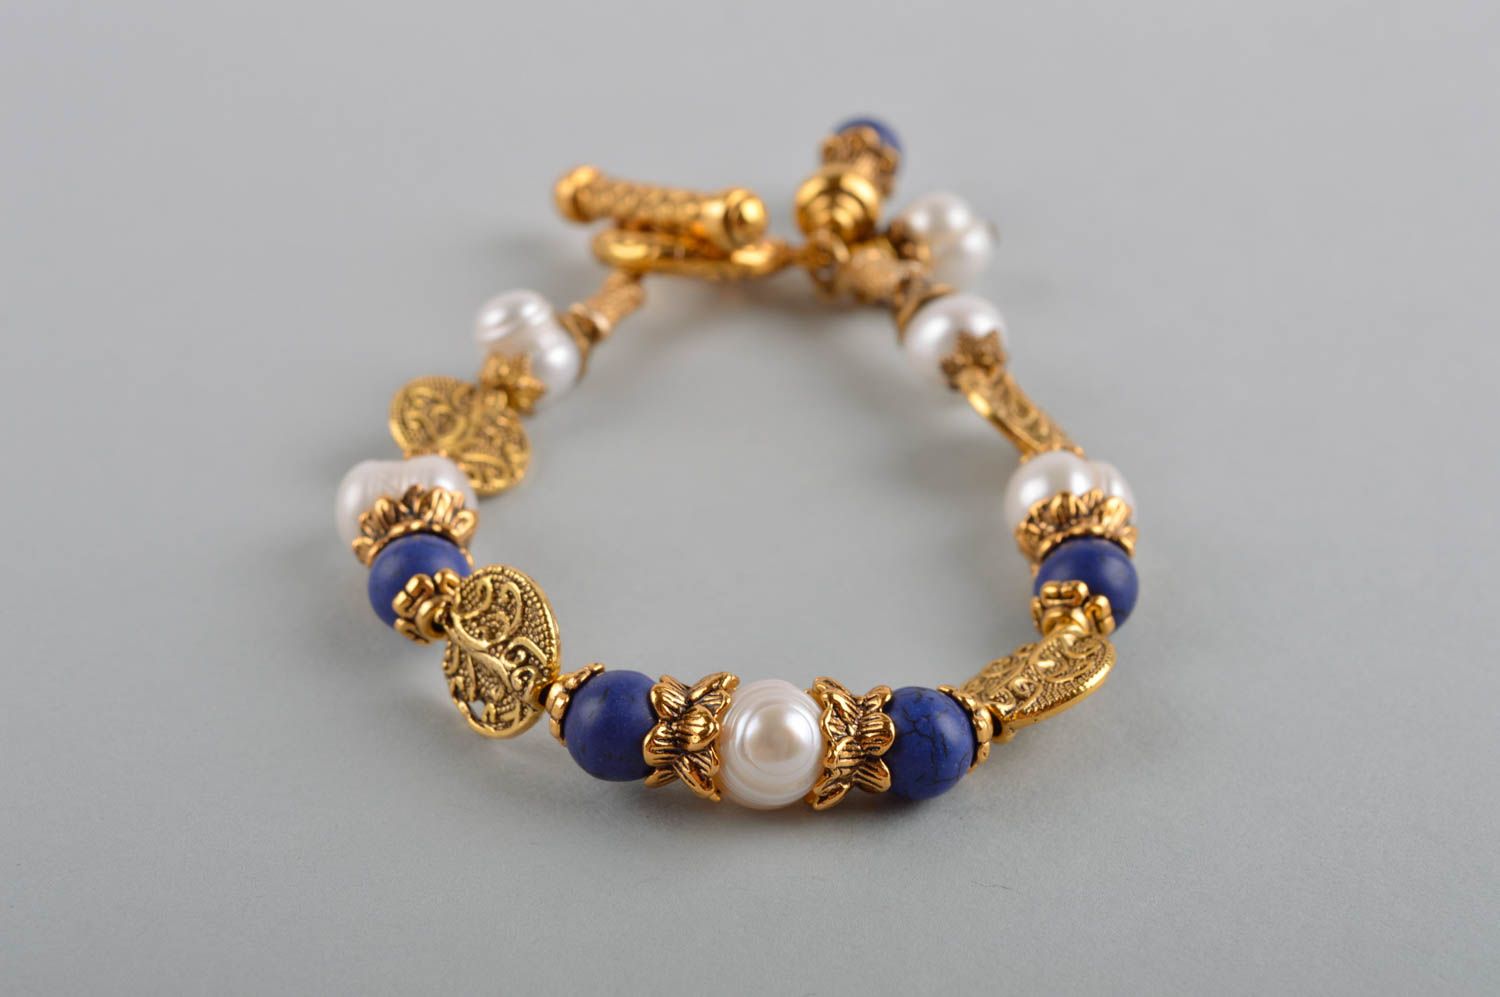 Homemade white and blue beads charm bracelet gemstone jewelry for women photo 3